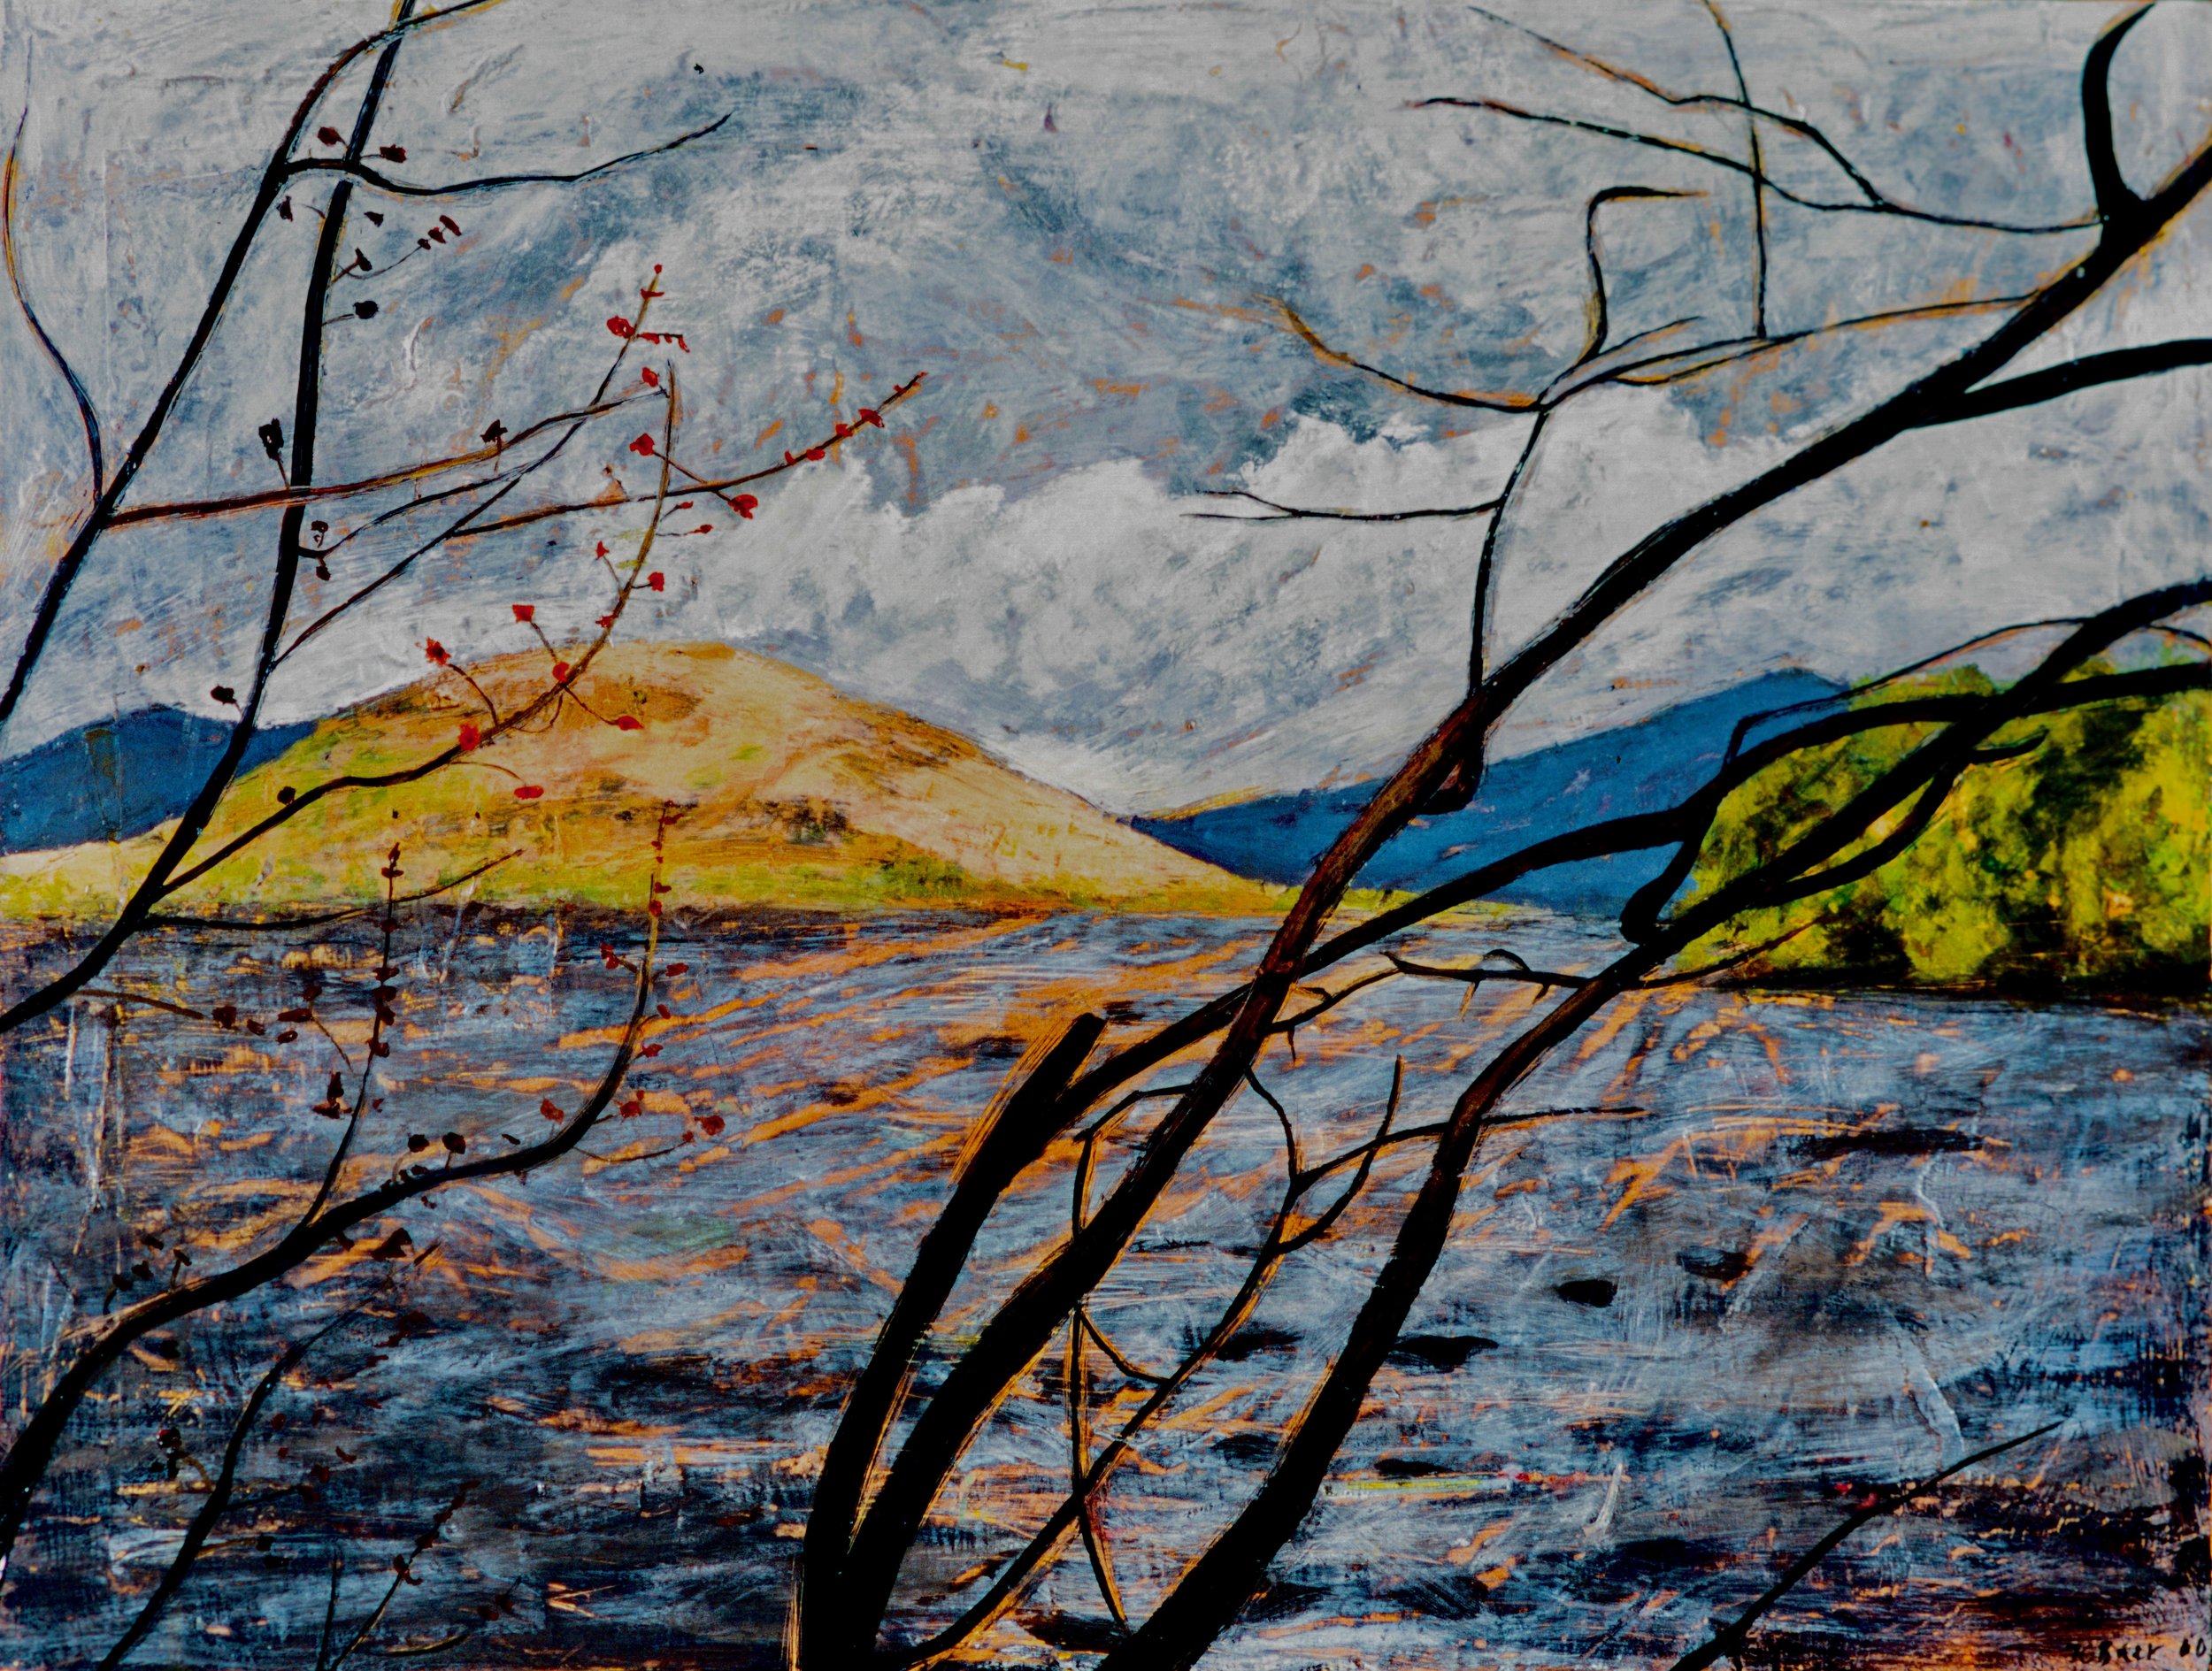 Lake George Narrows, NY, 2000, 22 ½ x 30, acrylic on wood, $2000